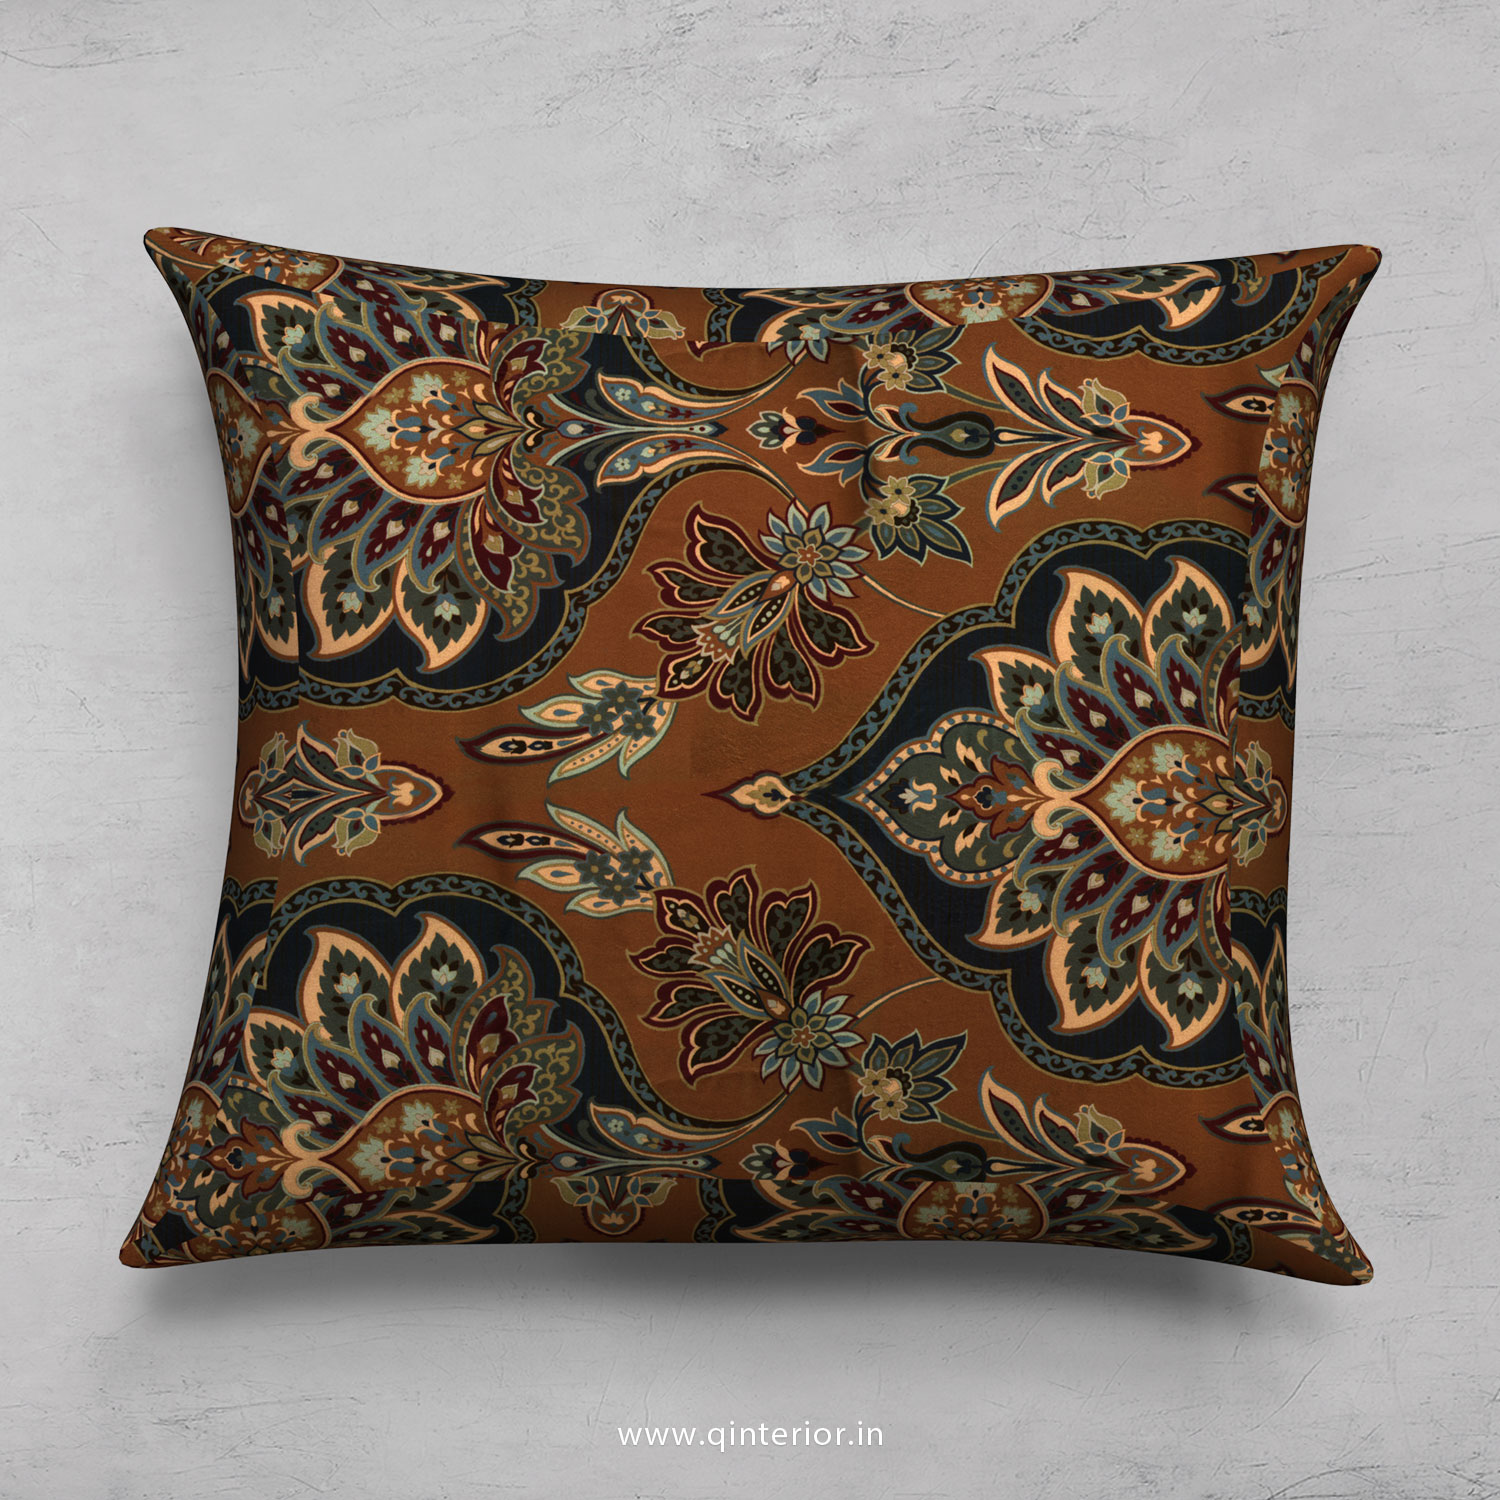 Cushion With Cushion Cover in Royal Velvet - CUS001 RV03